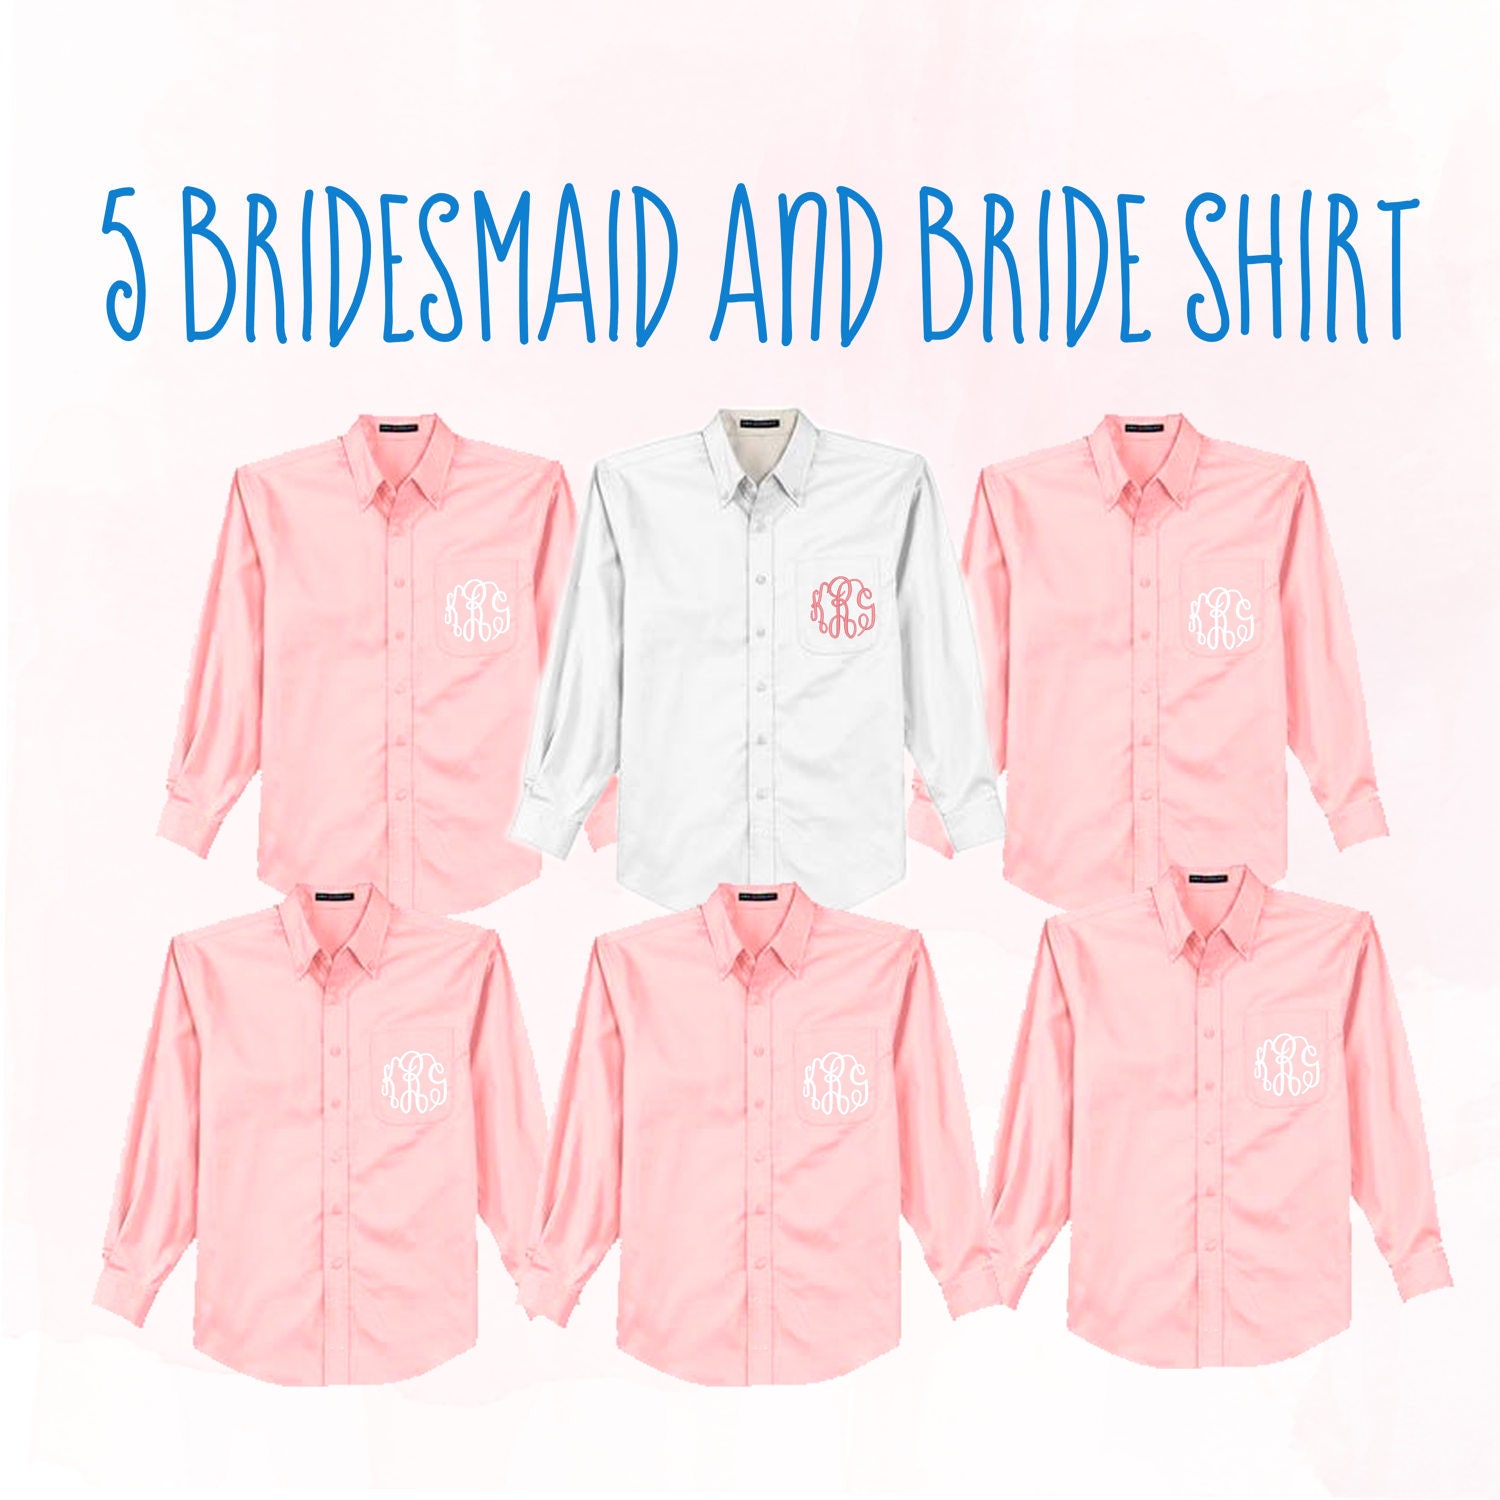 Wedding Shirts for Bridesmaids Bridal Party Gift| Wedding Day Shirts Bridesmaid Monogrammed Shirts Getting Ready Shirts Oxford Shirt